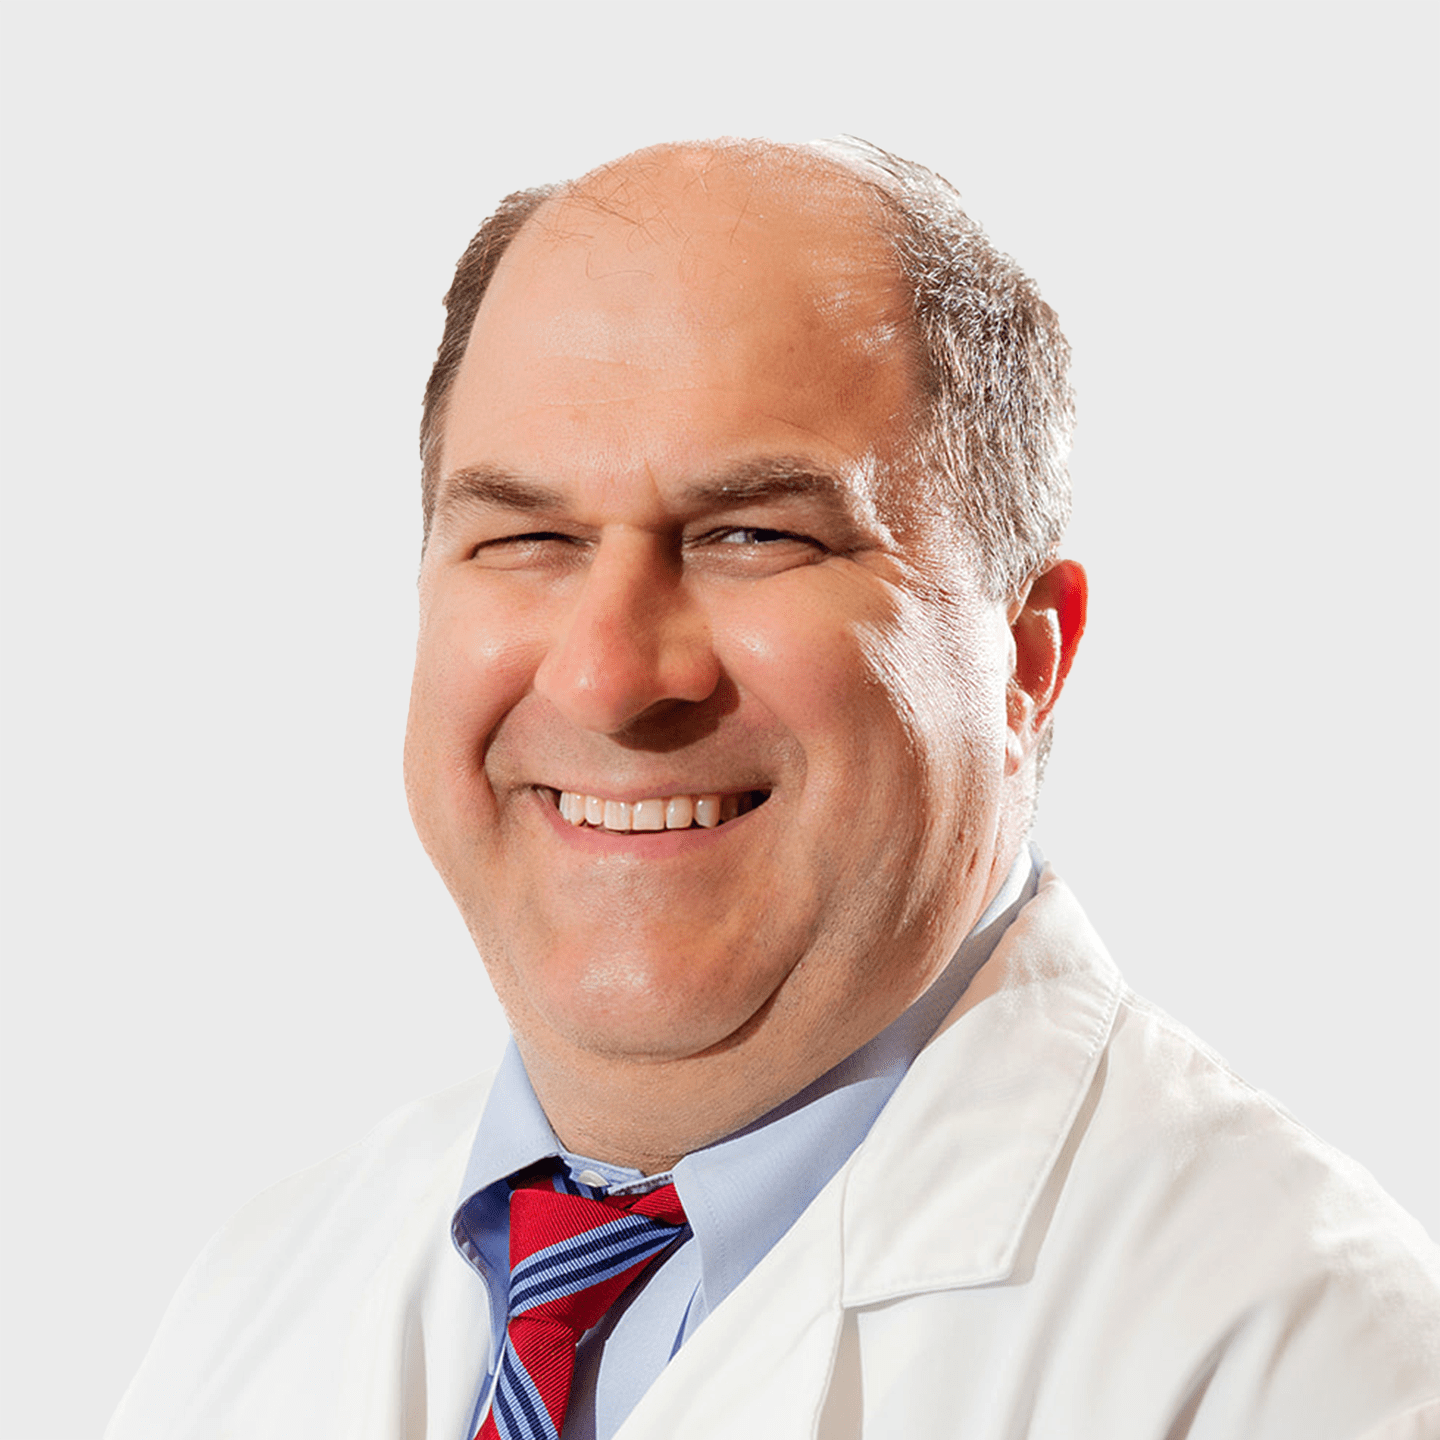 Physician Spotlight on Dr. Ryan Naujoks